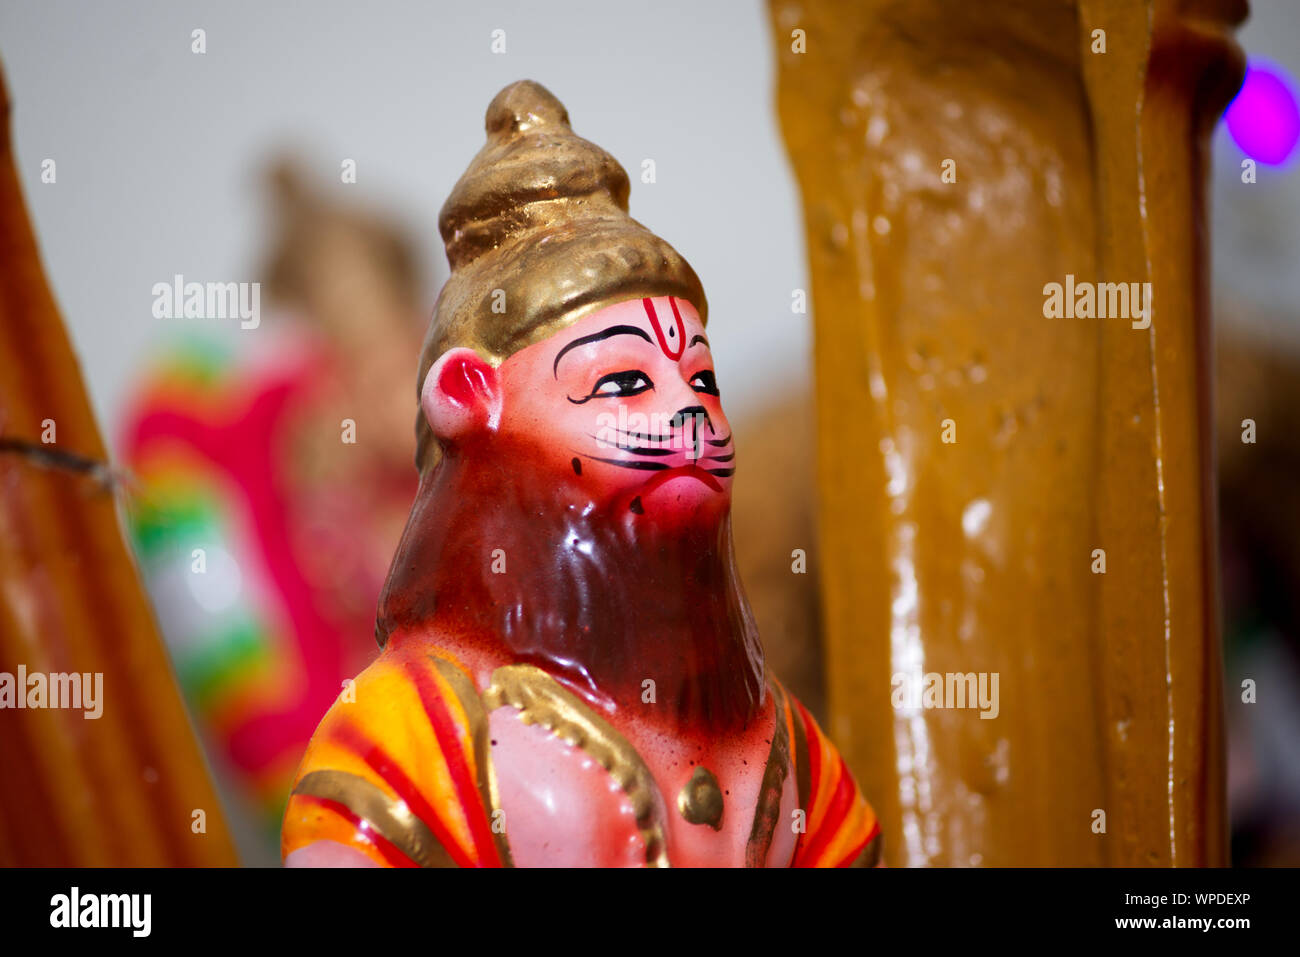 Lord narasimha swamy, The lion face god Stock Photo